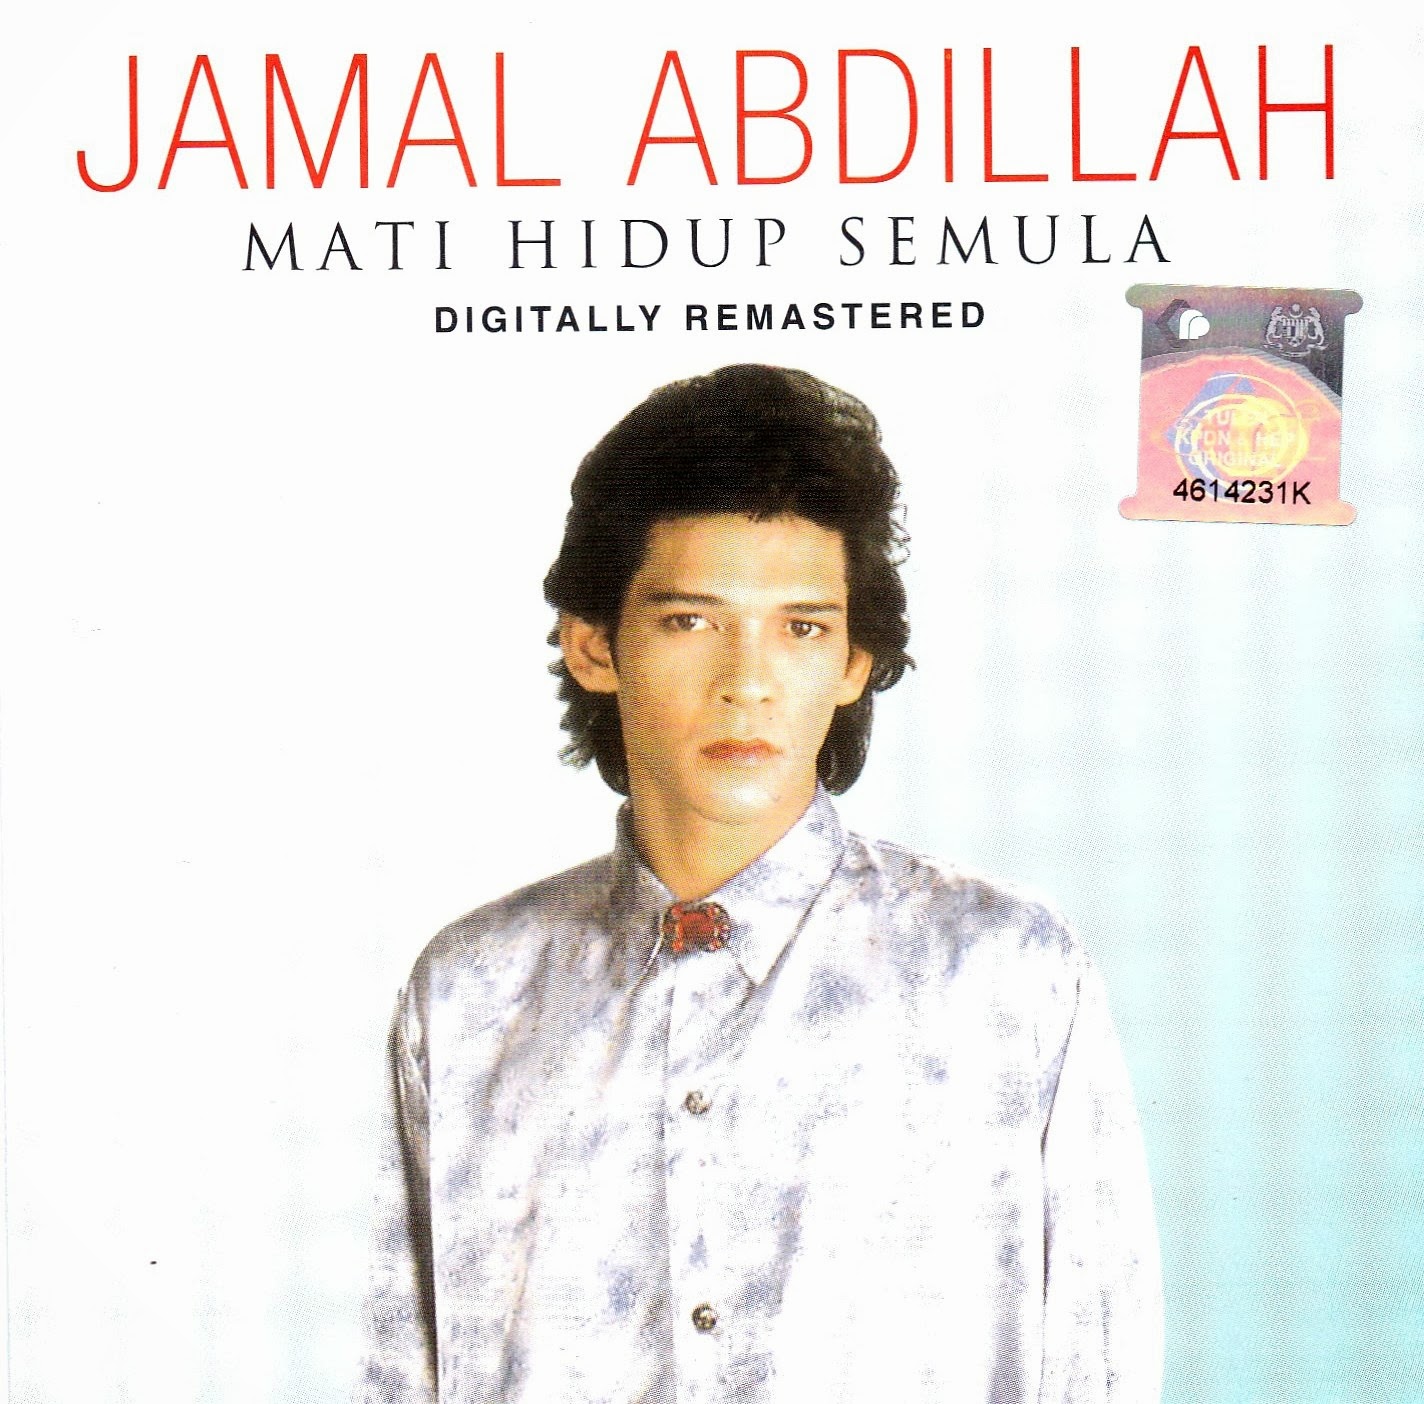 JAMAL ABDILLAH